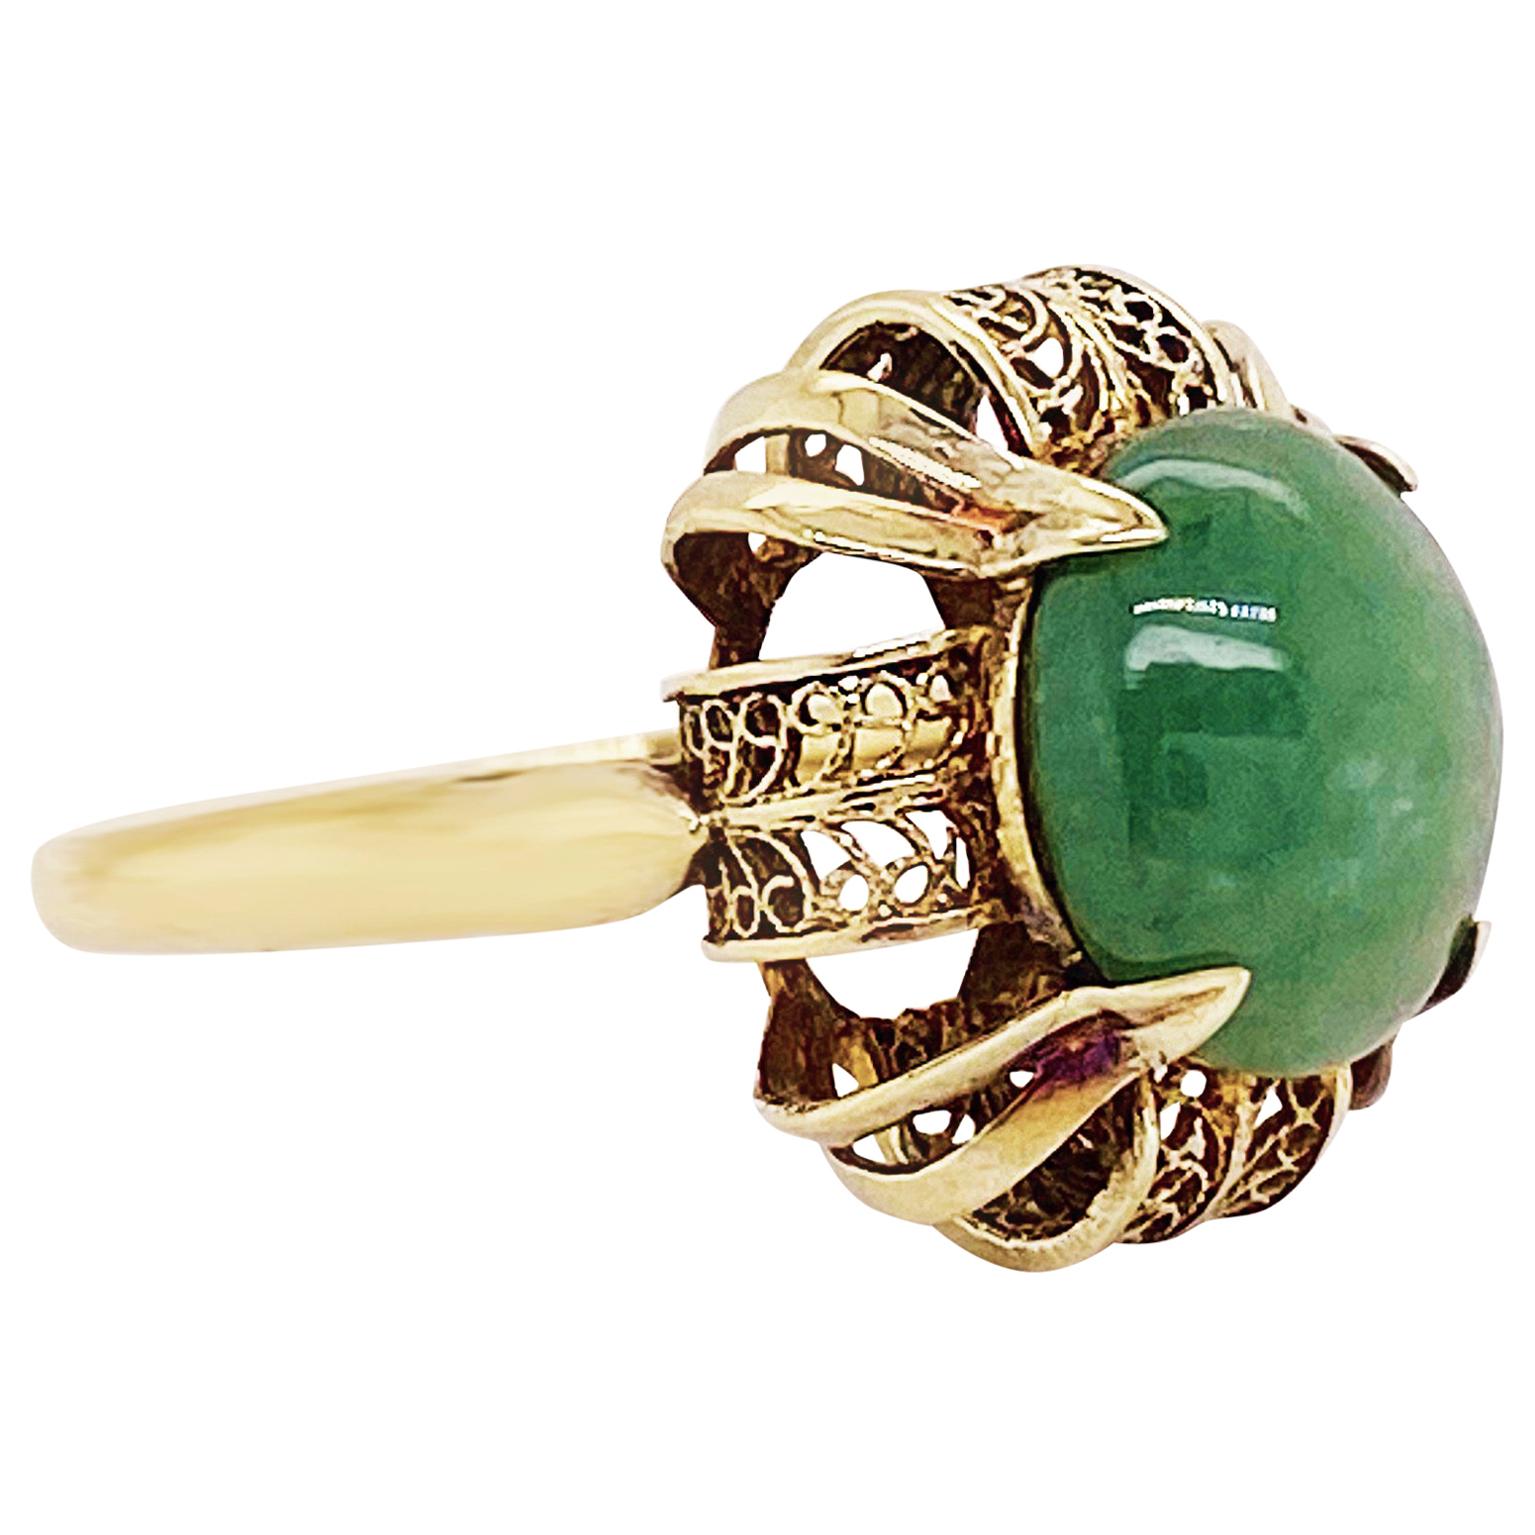 Jade Antique Ring, Jadeite Jade Ring in 14K Yellow Gold, Antique Filigree Ring